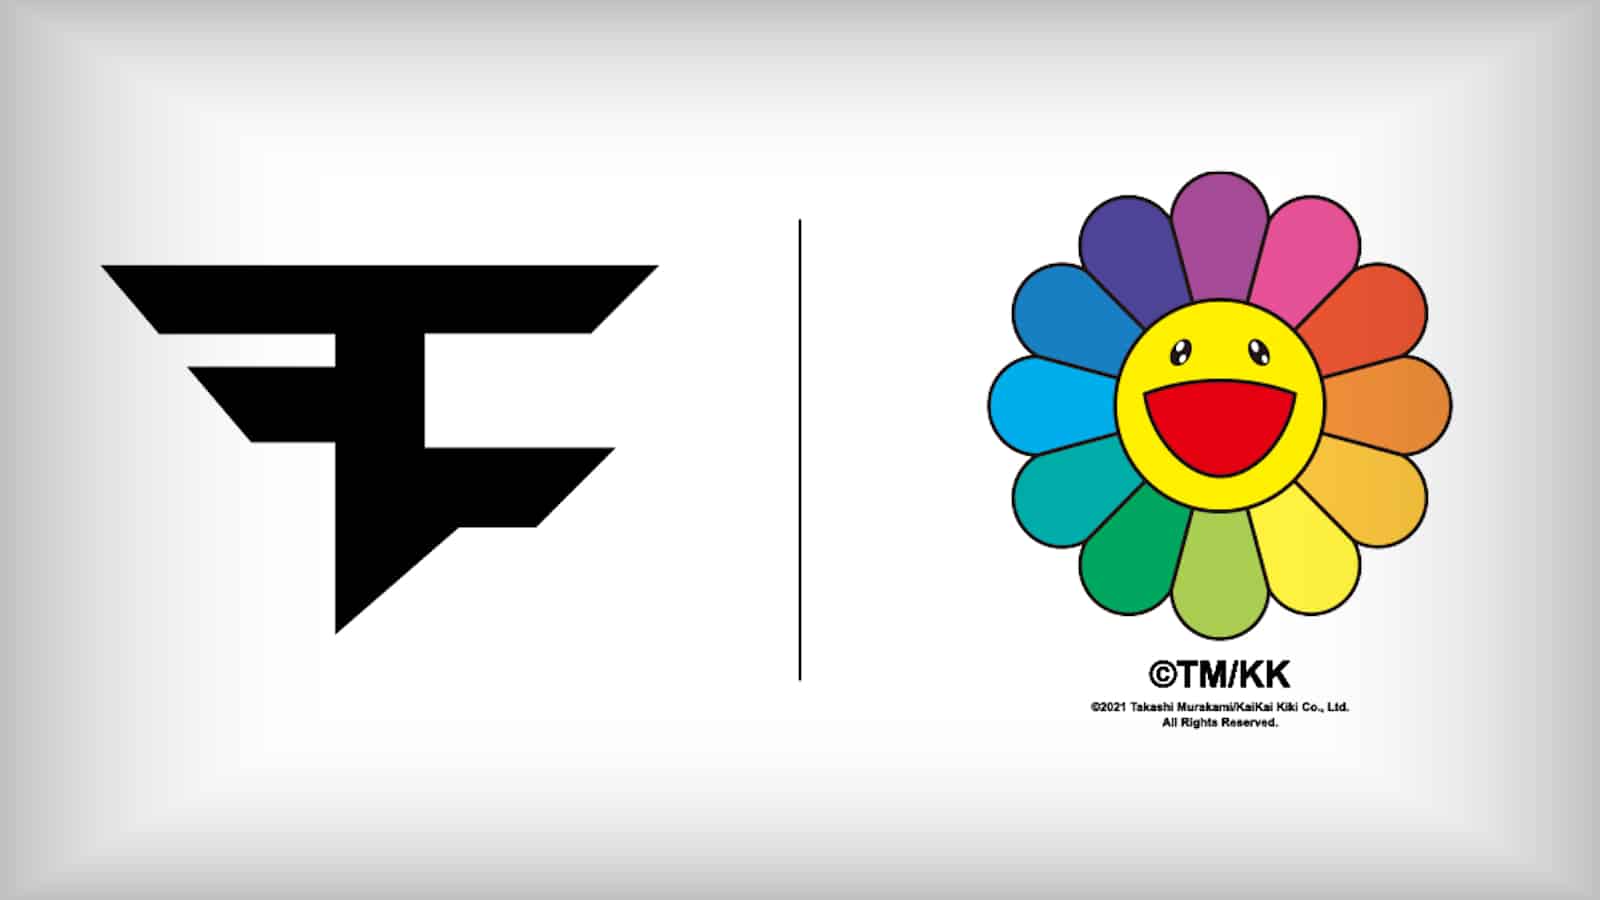 Takashi Murakami Collaborates With FaZe Clan on Gaming Merch